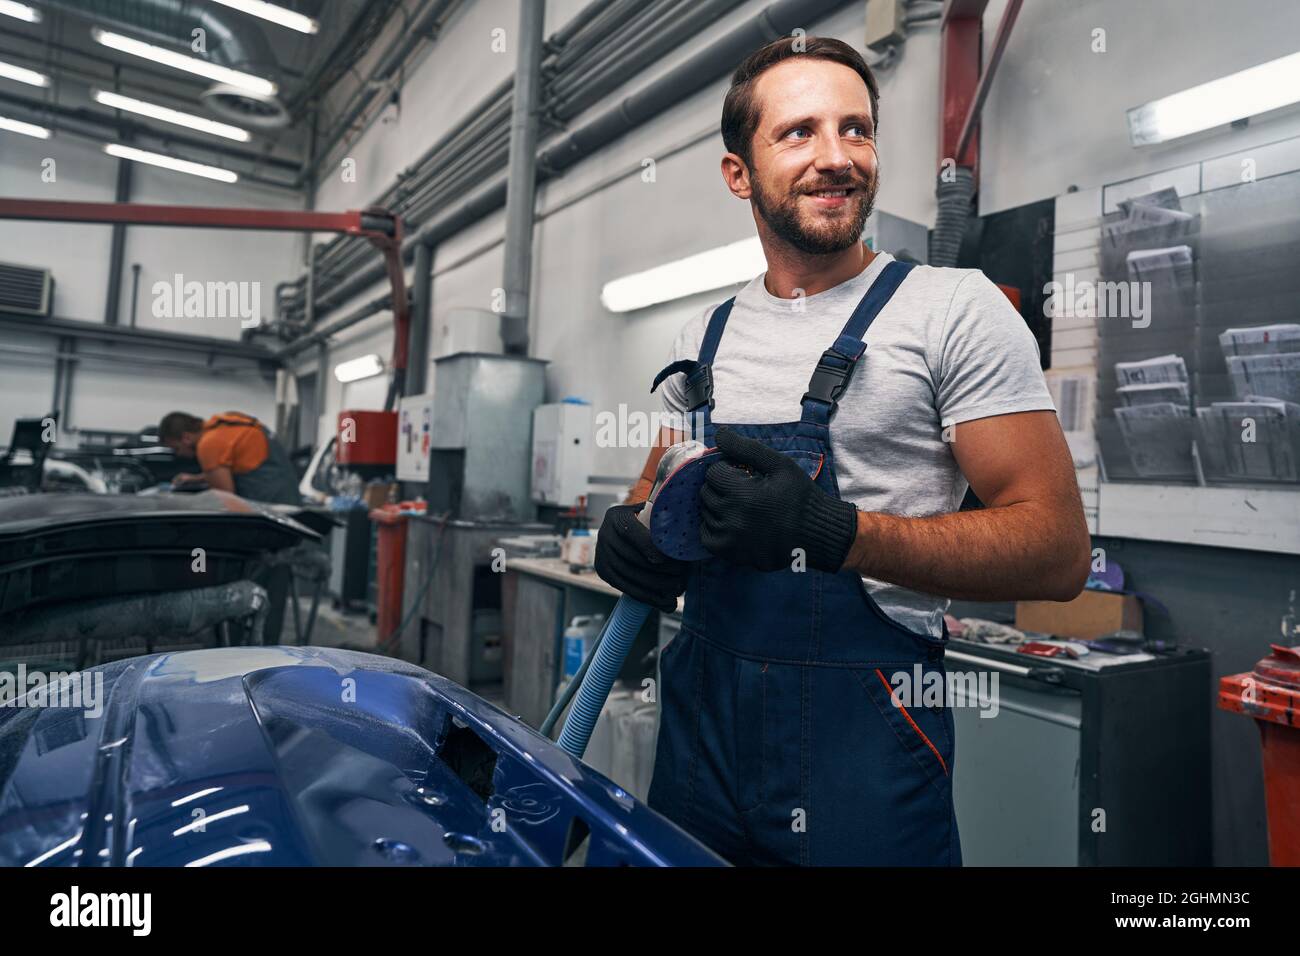 Male car workshop worker taking care of sander after work Stock Photo